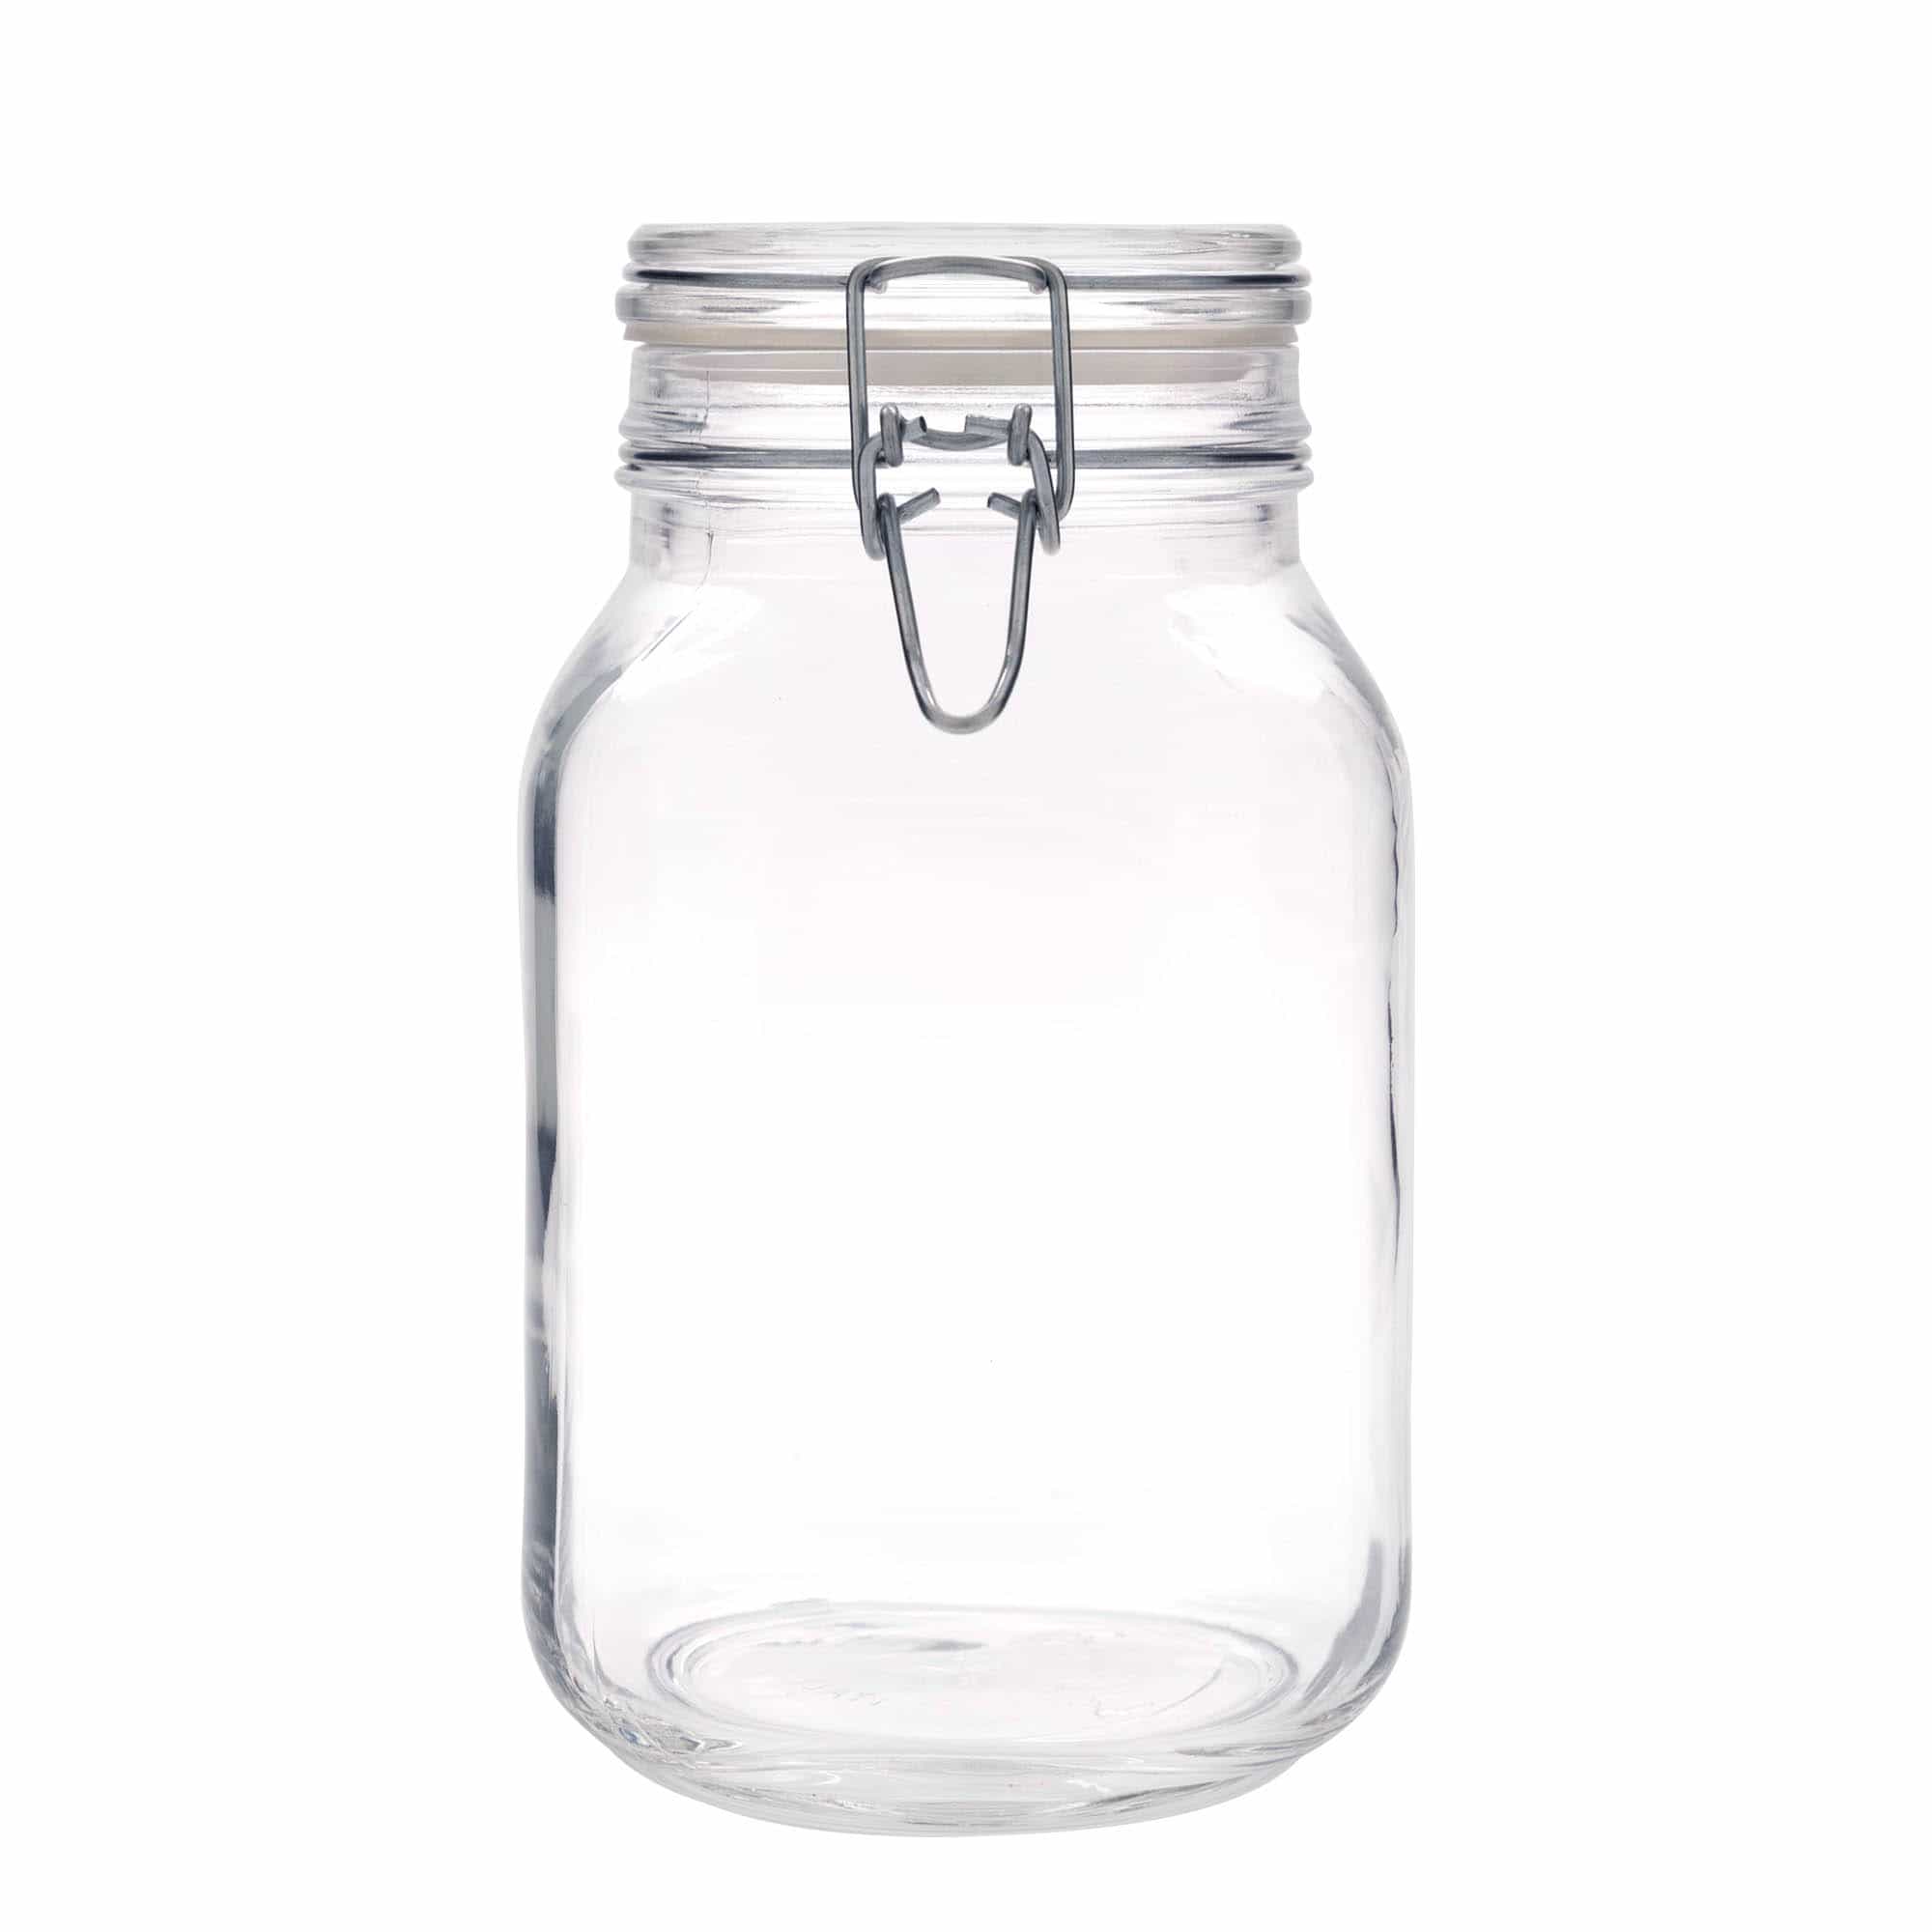 2,000 ml clip top jar 'Fido', square, closure: clip top